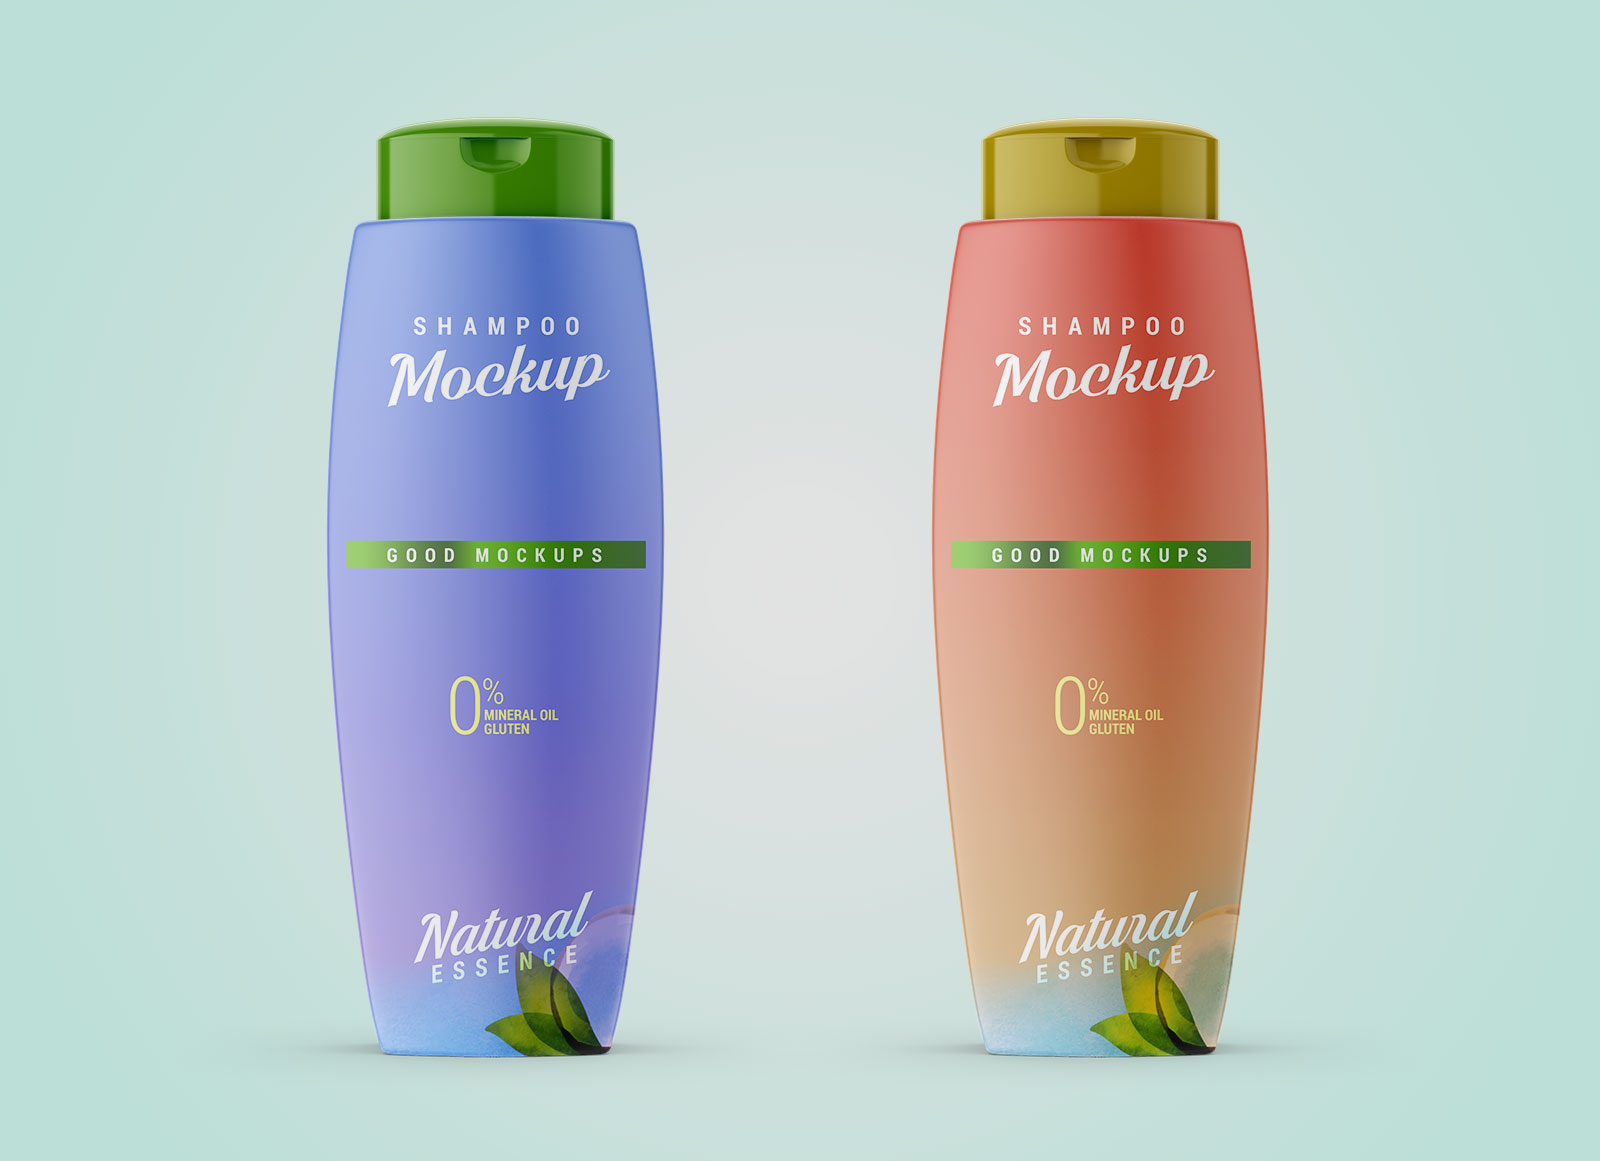 Free-Plastic-Shampoo-Bottle-Mockup-PSD-2